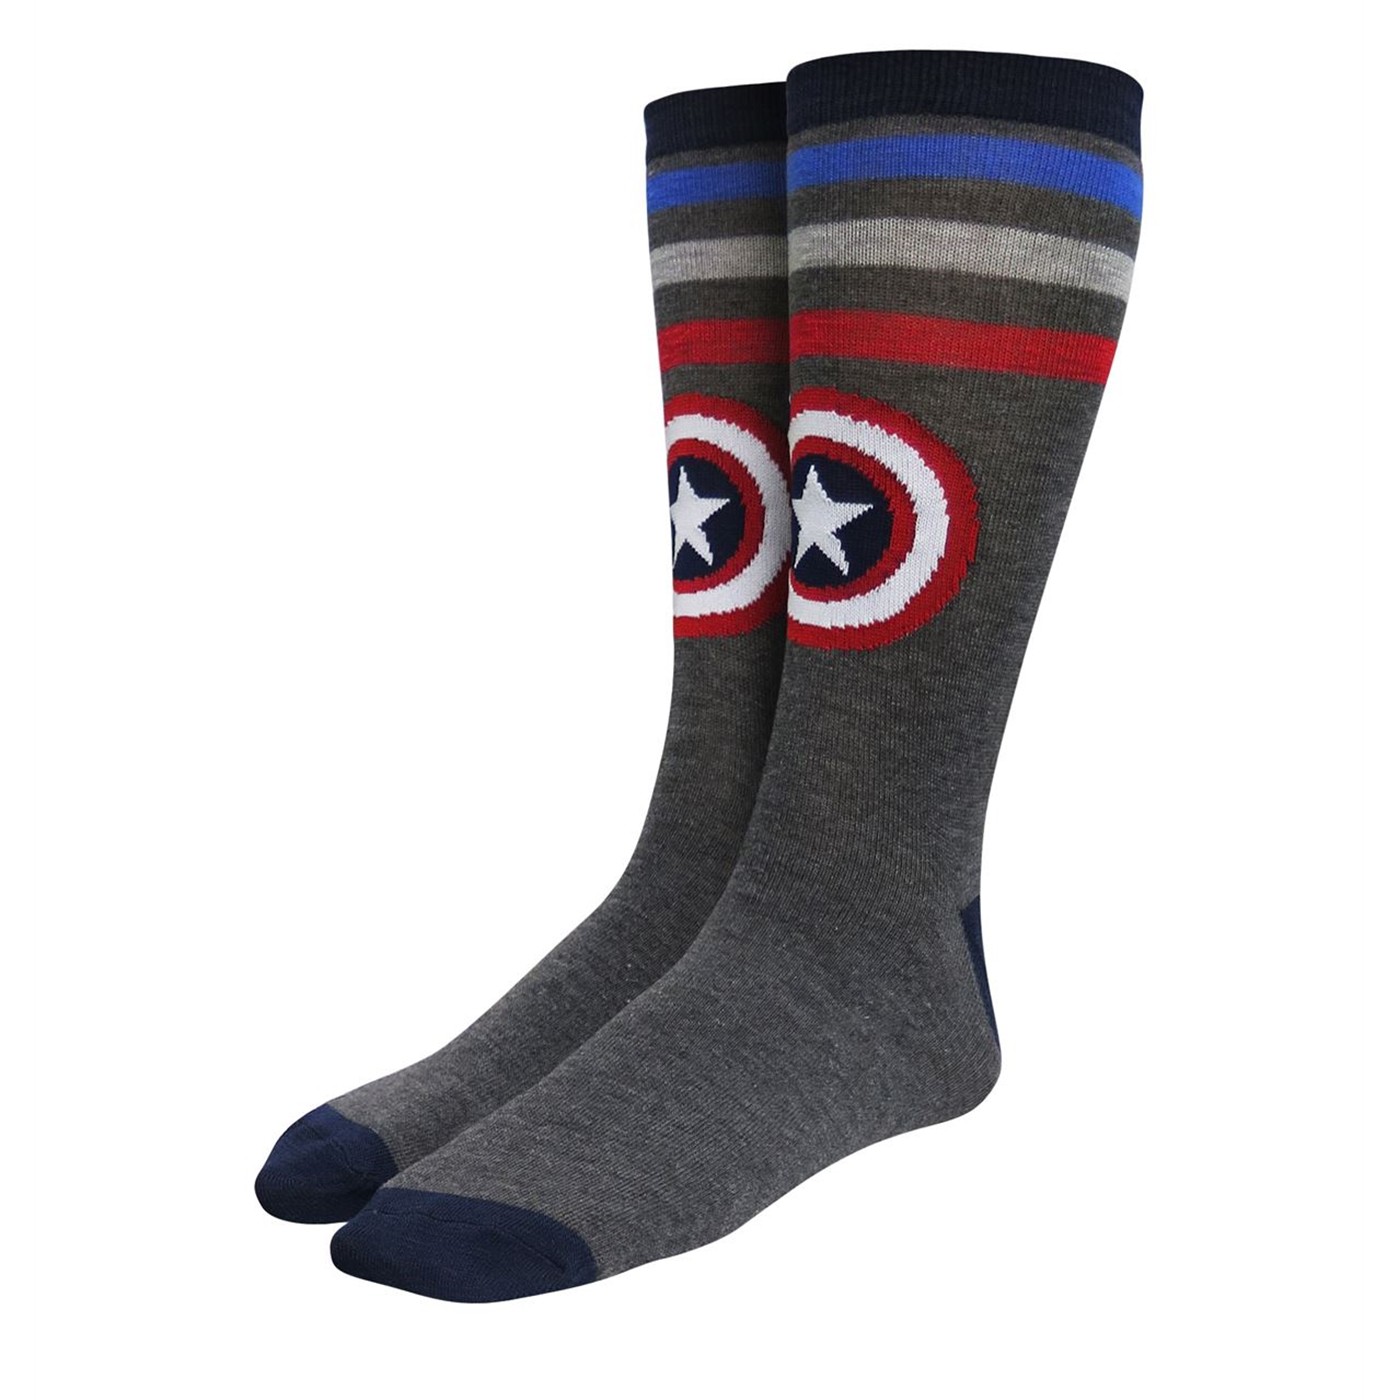 Captain America Action Hero Photoreal Socks 2-Pack